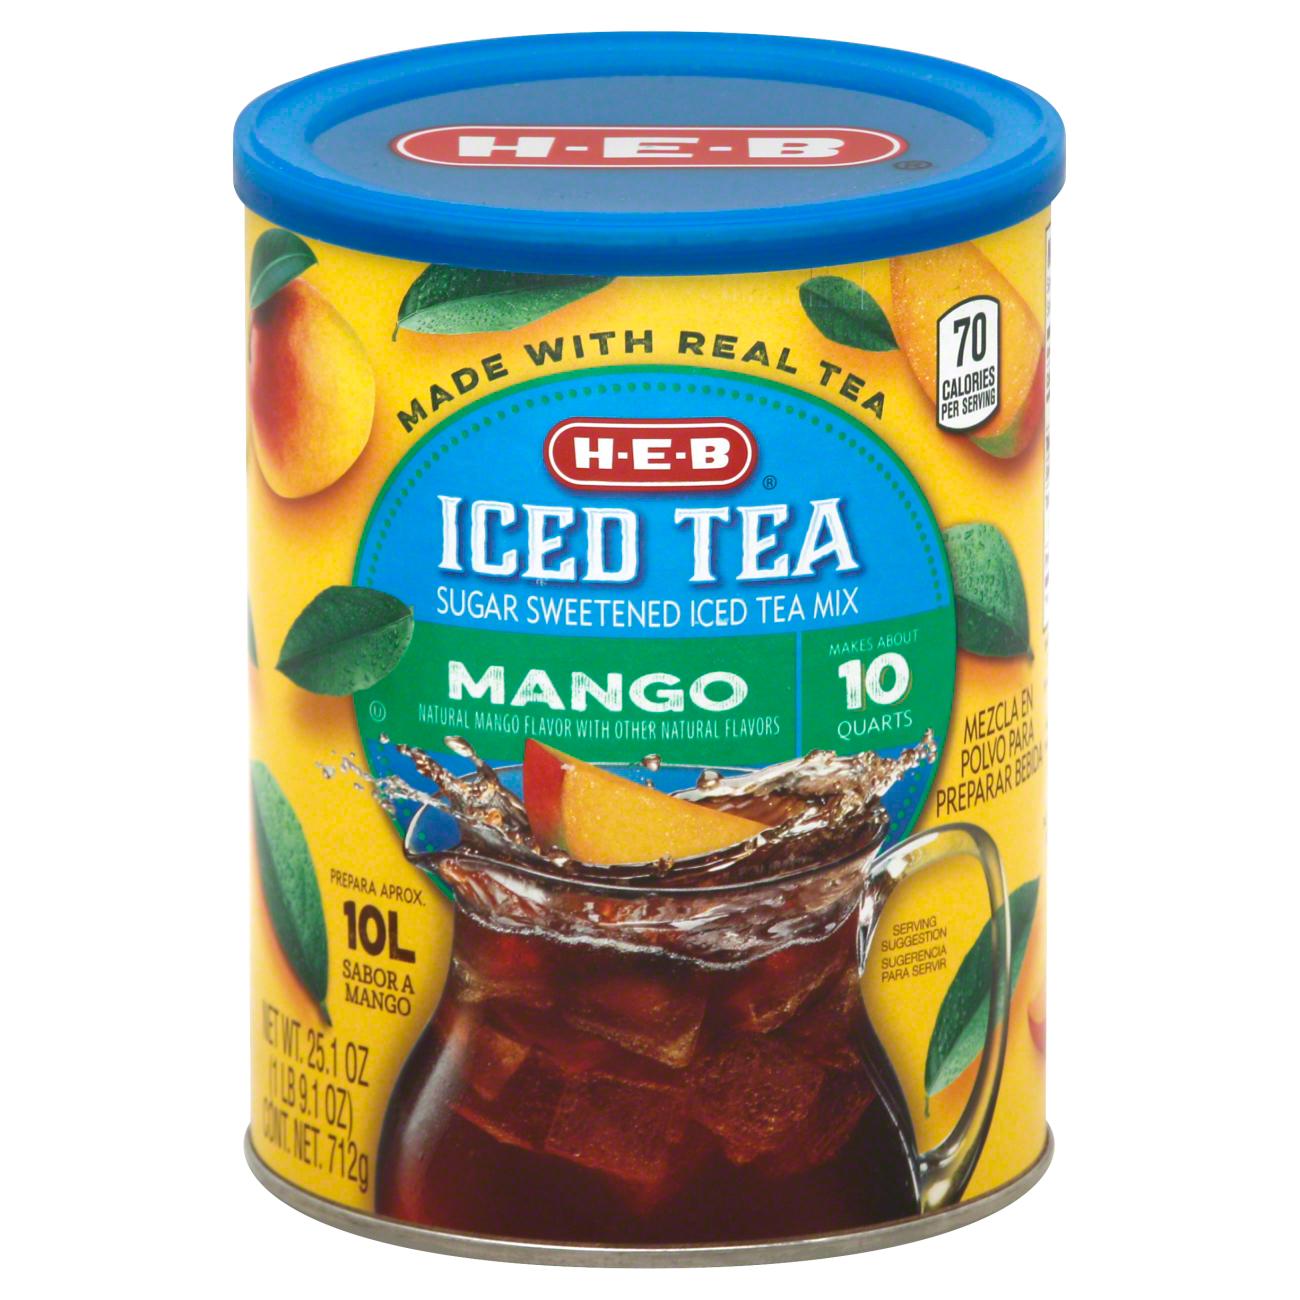 H-E-B Mango Sugar Sweetened Iced Tea Mix; image 2 of 2